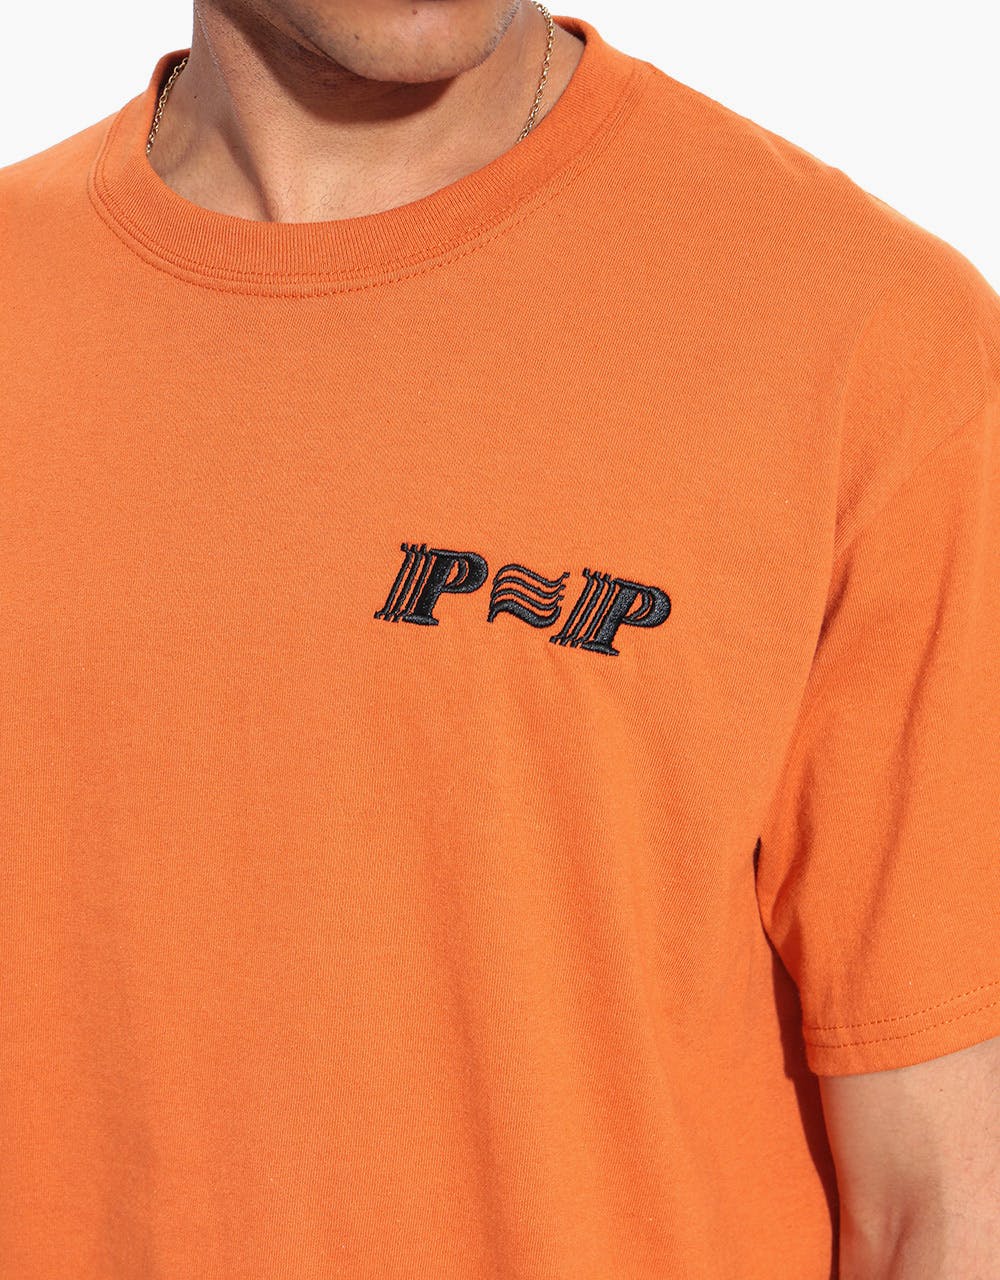 Pass Port PPP~PPP T-Shirt - Texas Orange